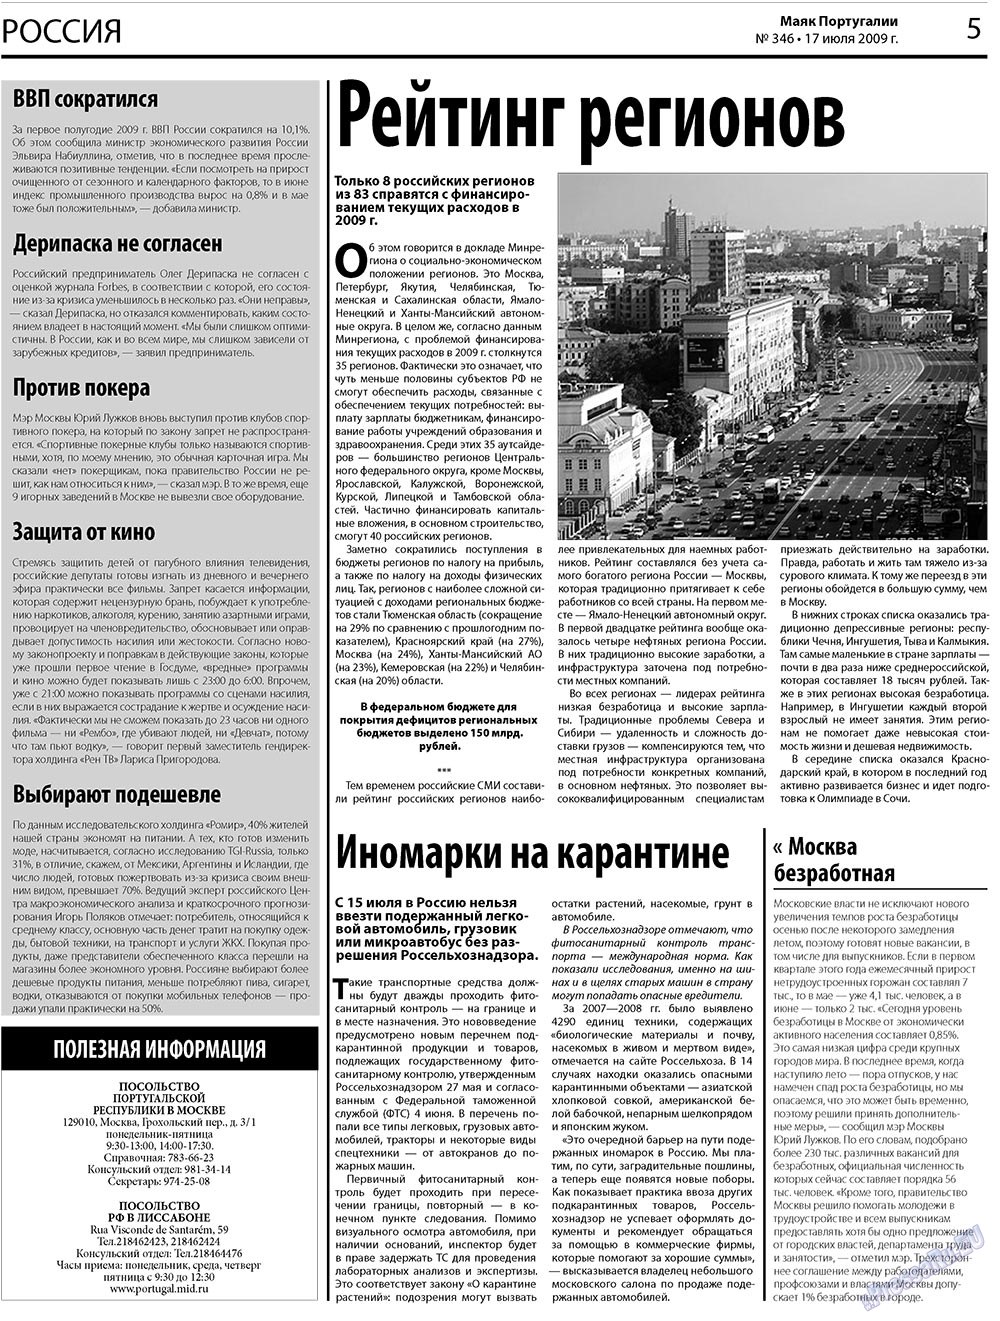 Маяк Португалии, газета. 2009 №29 стр.5